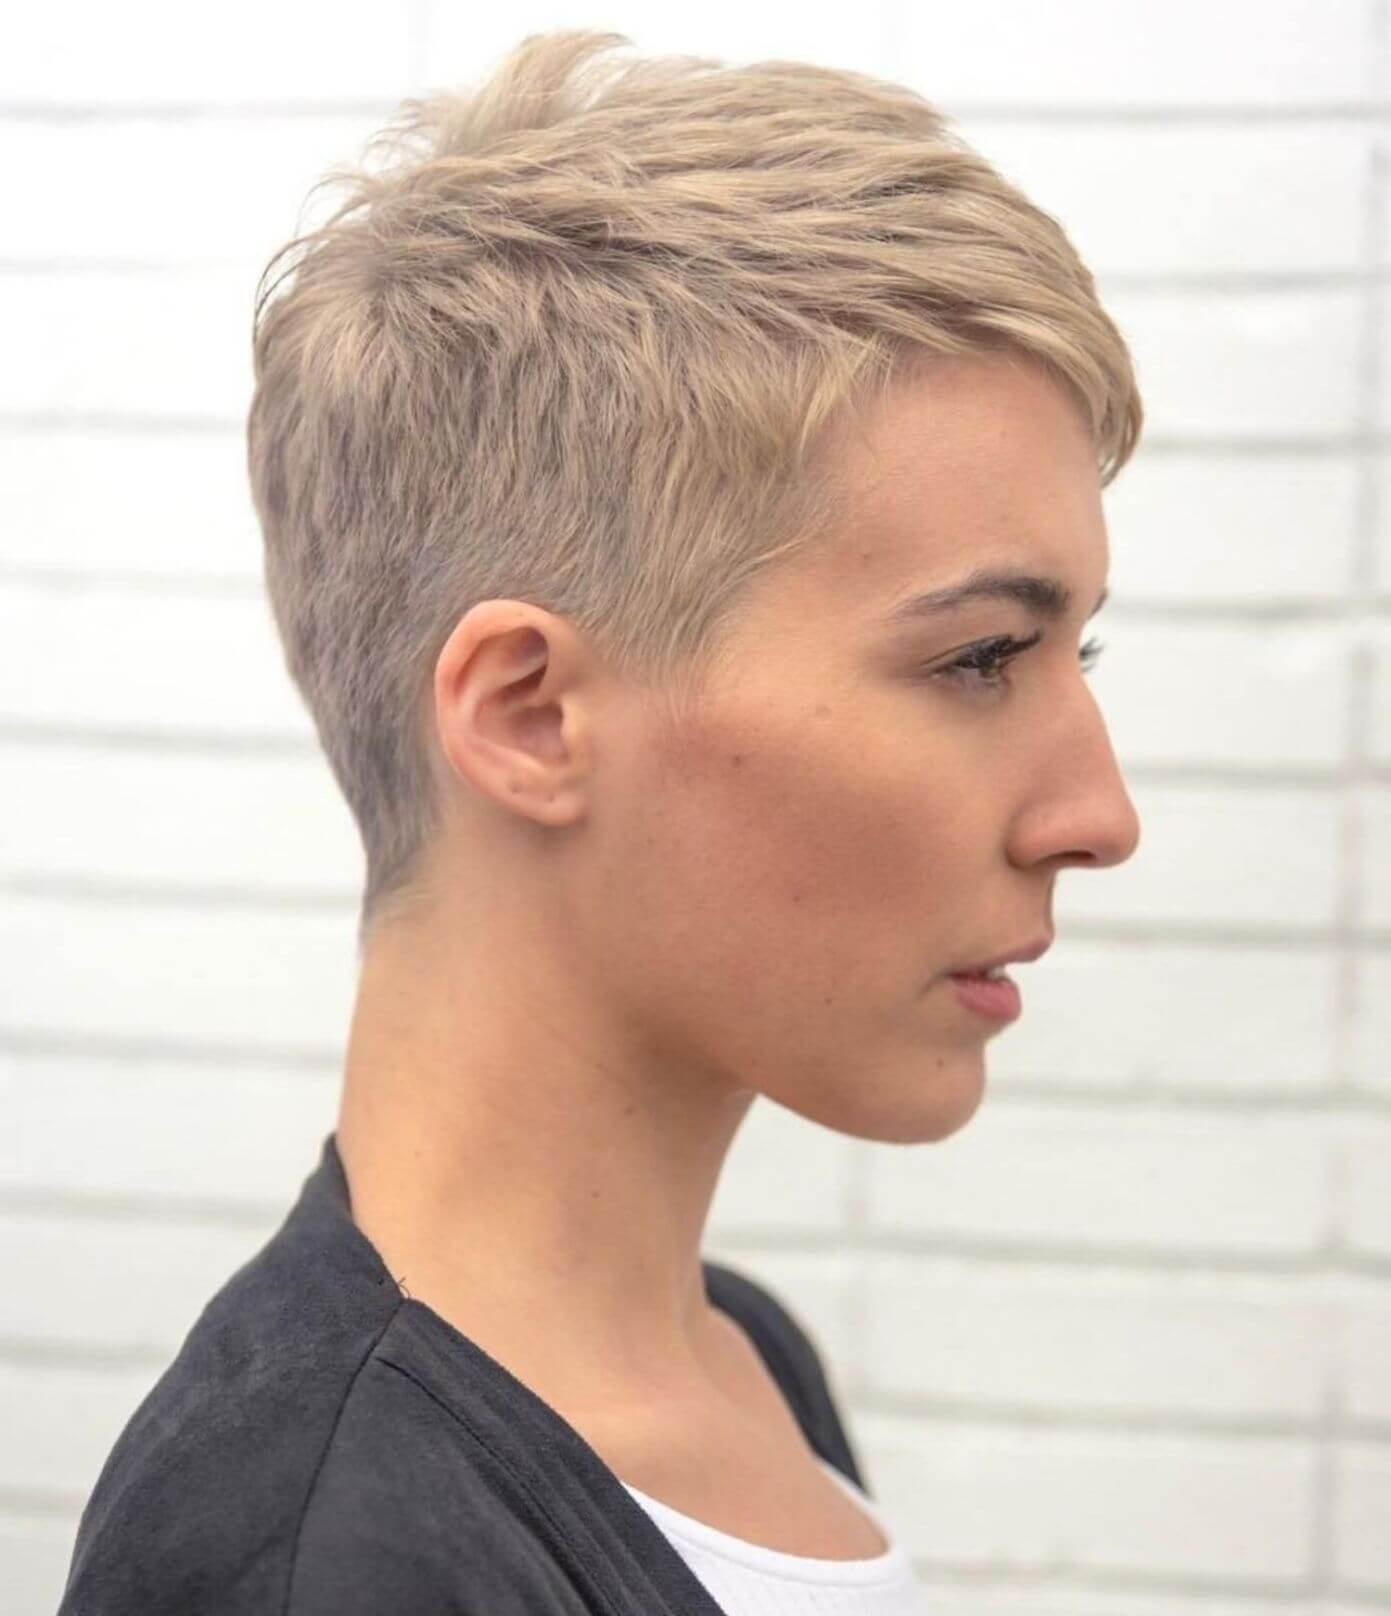 Images Of Short Pixie Cuts 25 Short Haircuts Models